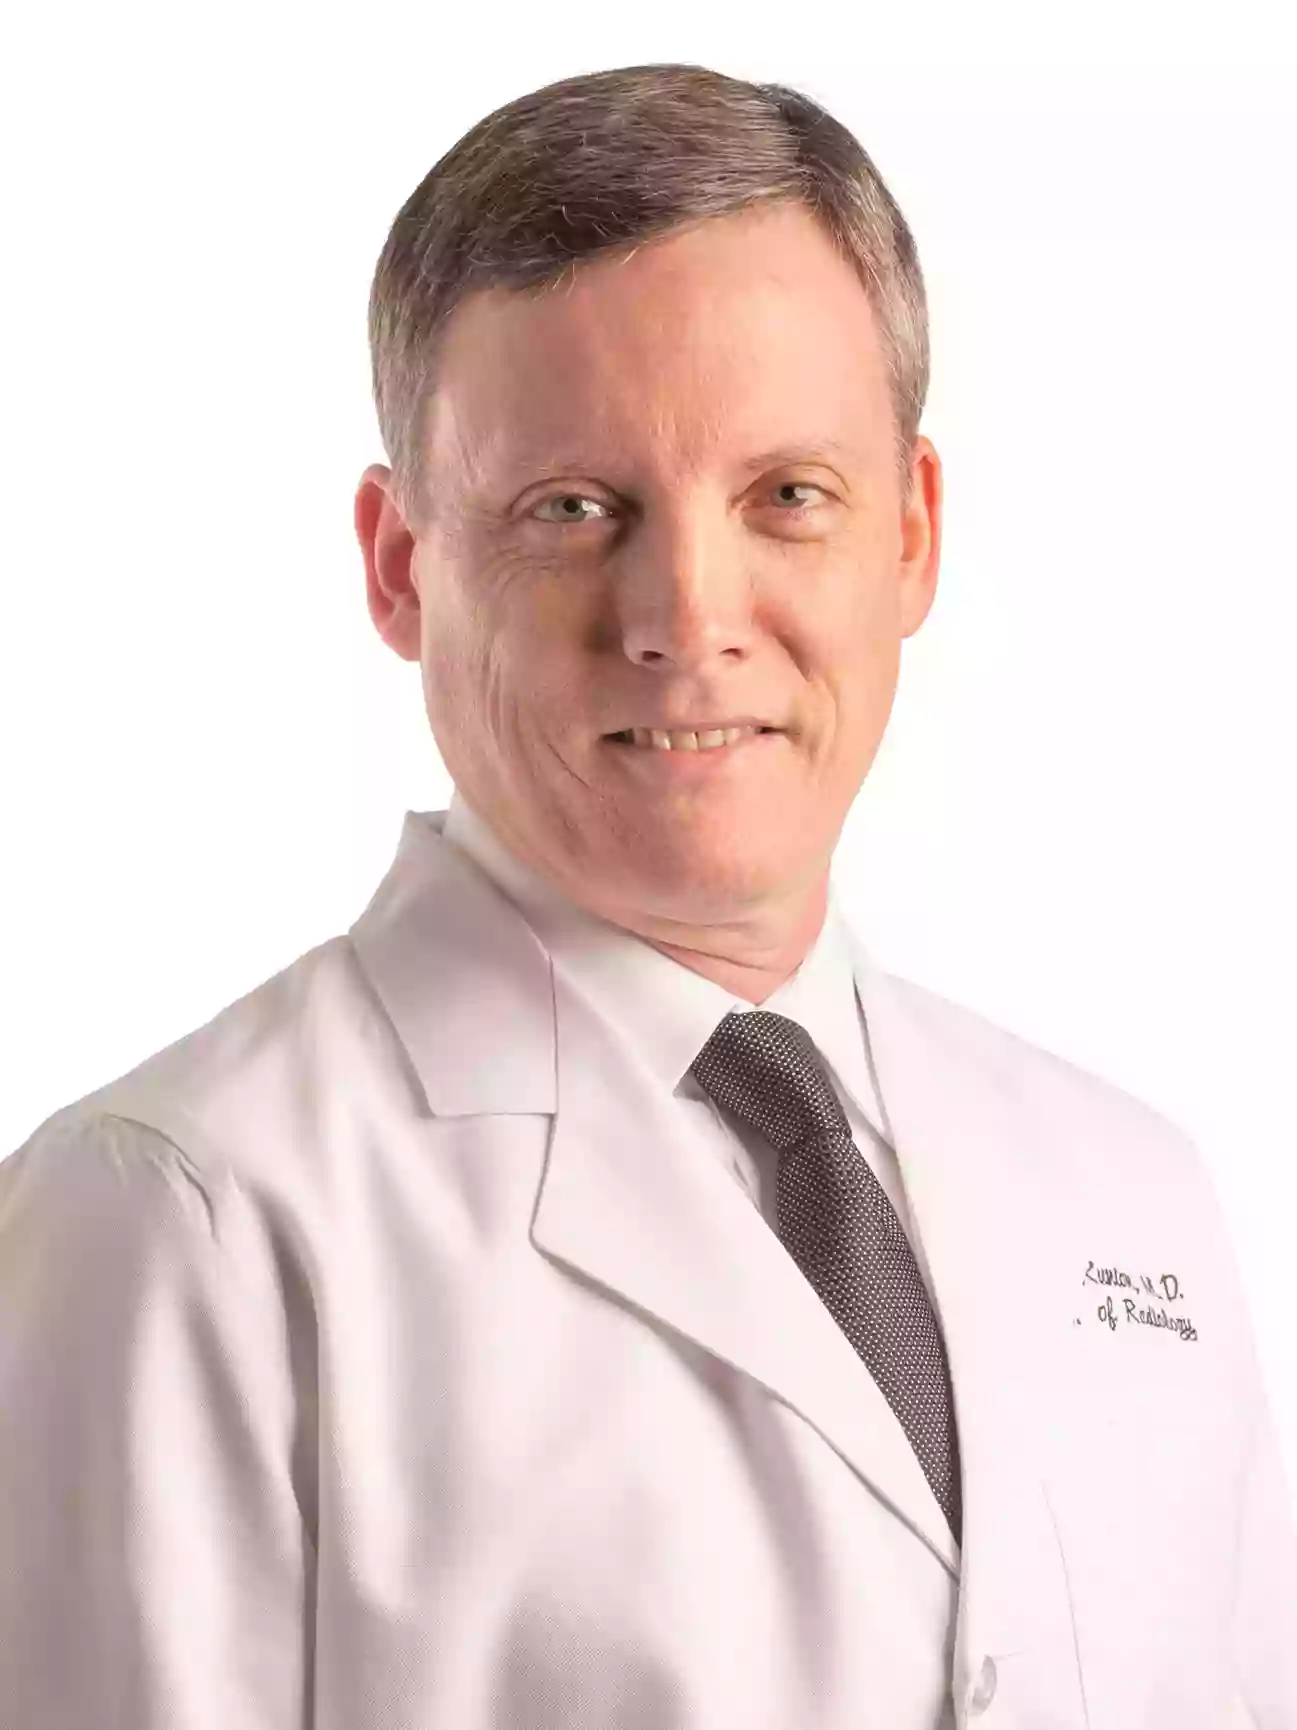 UAMS Health - Lance K. Runion, M.D.